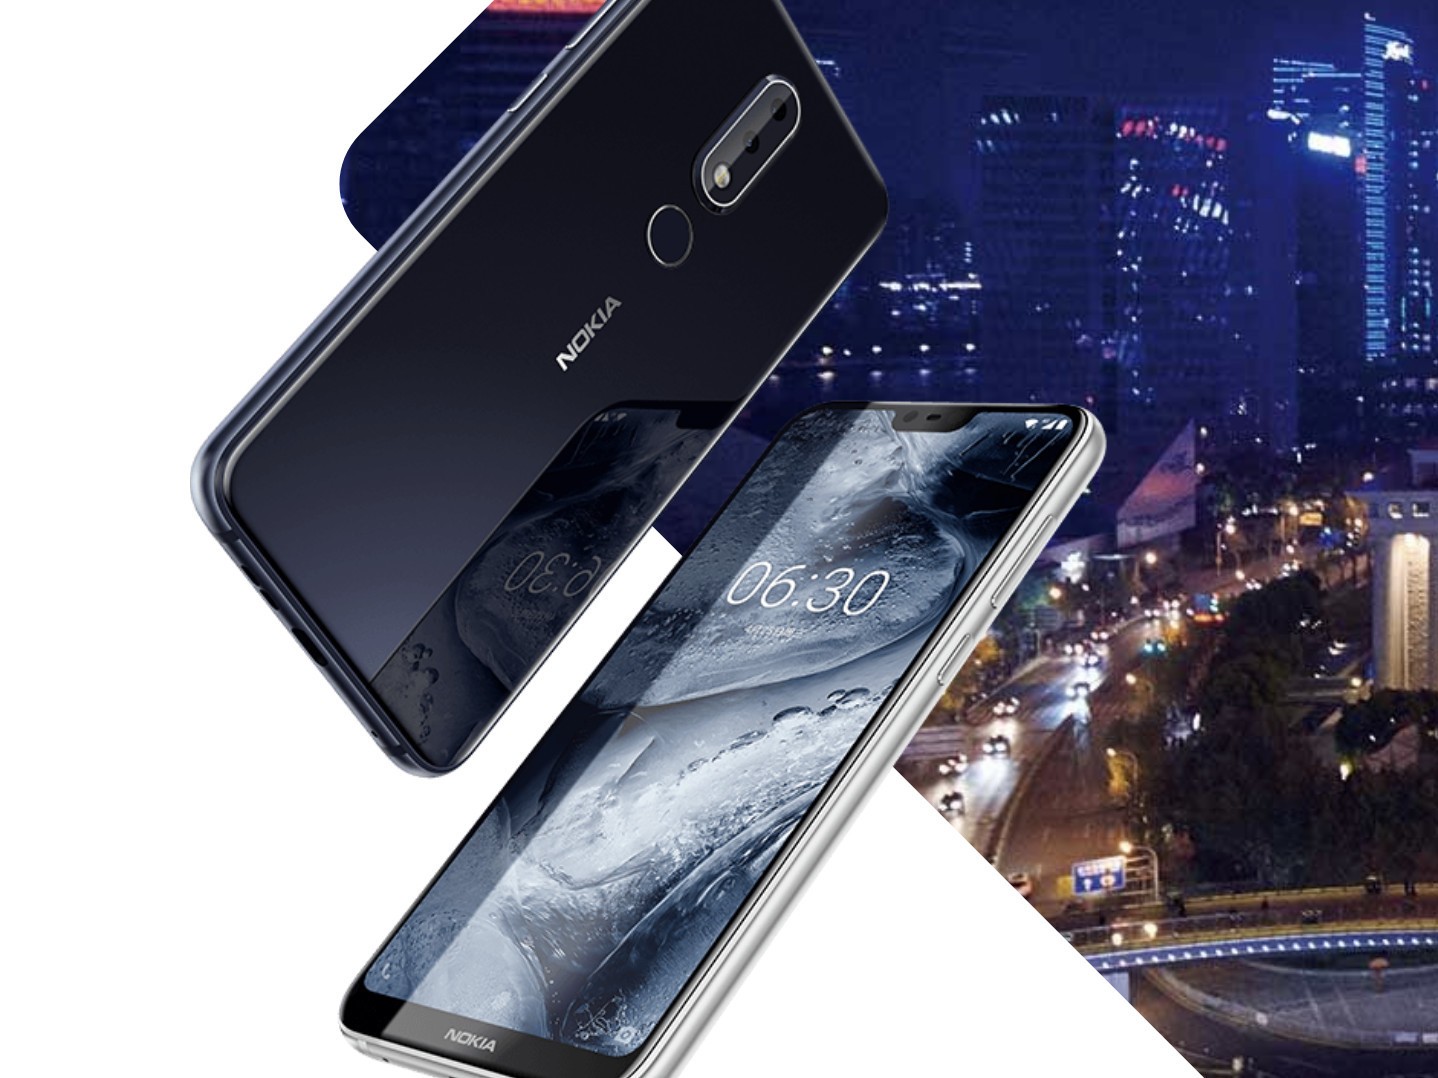 Nokia X6 รุ่นใหม่มาพร้อมรอยบากอาจได้ขายนอกประเทศจีนด้วย